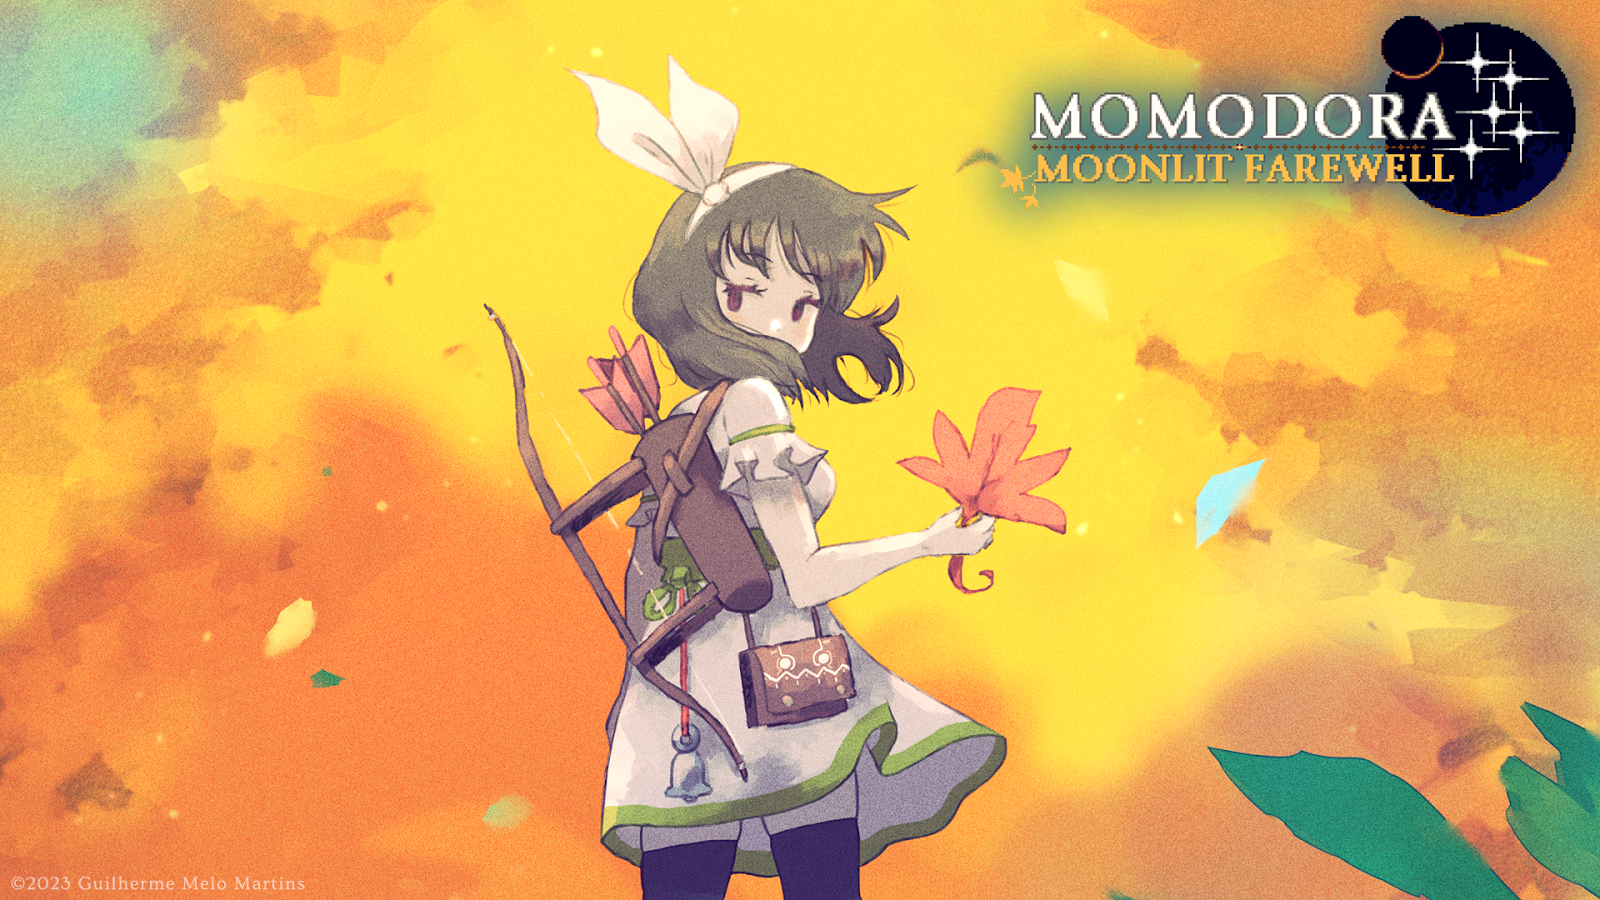 Momodora: Moonlit Farewell: ora disponibile su Steam